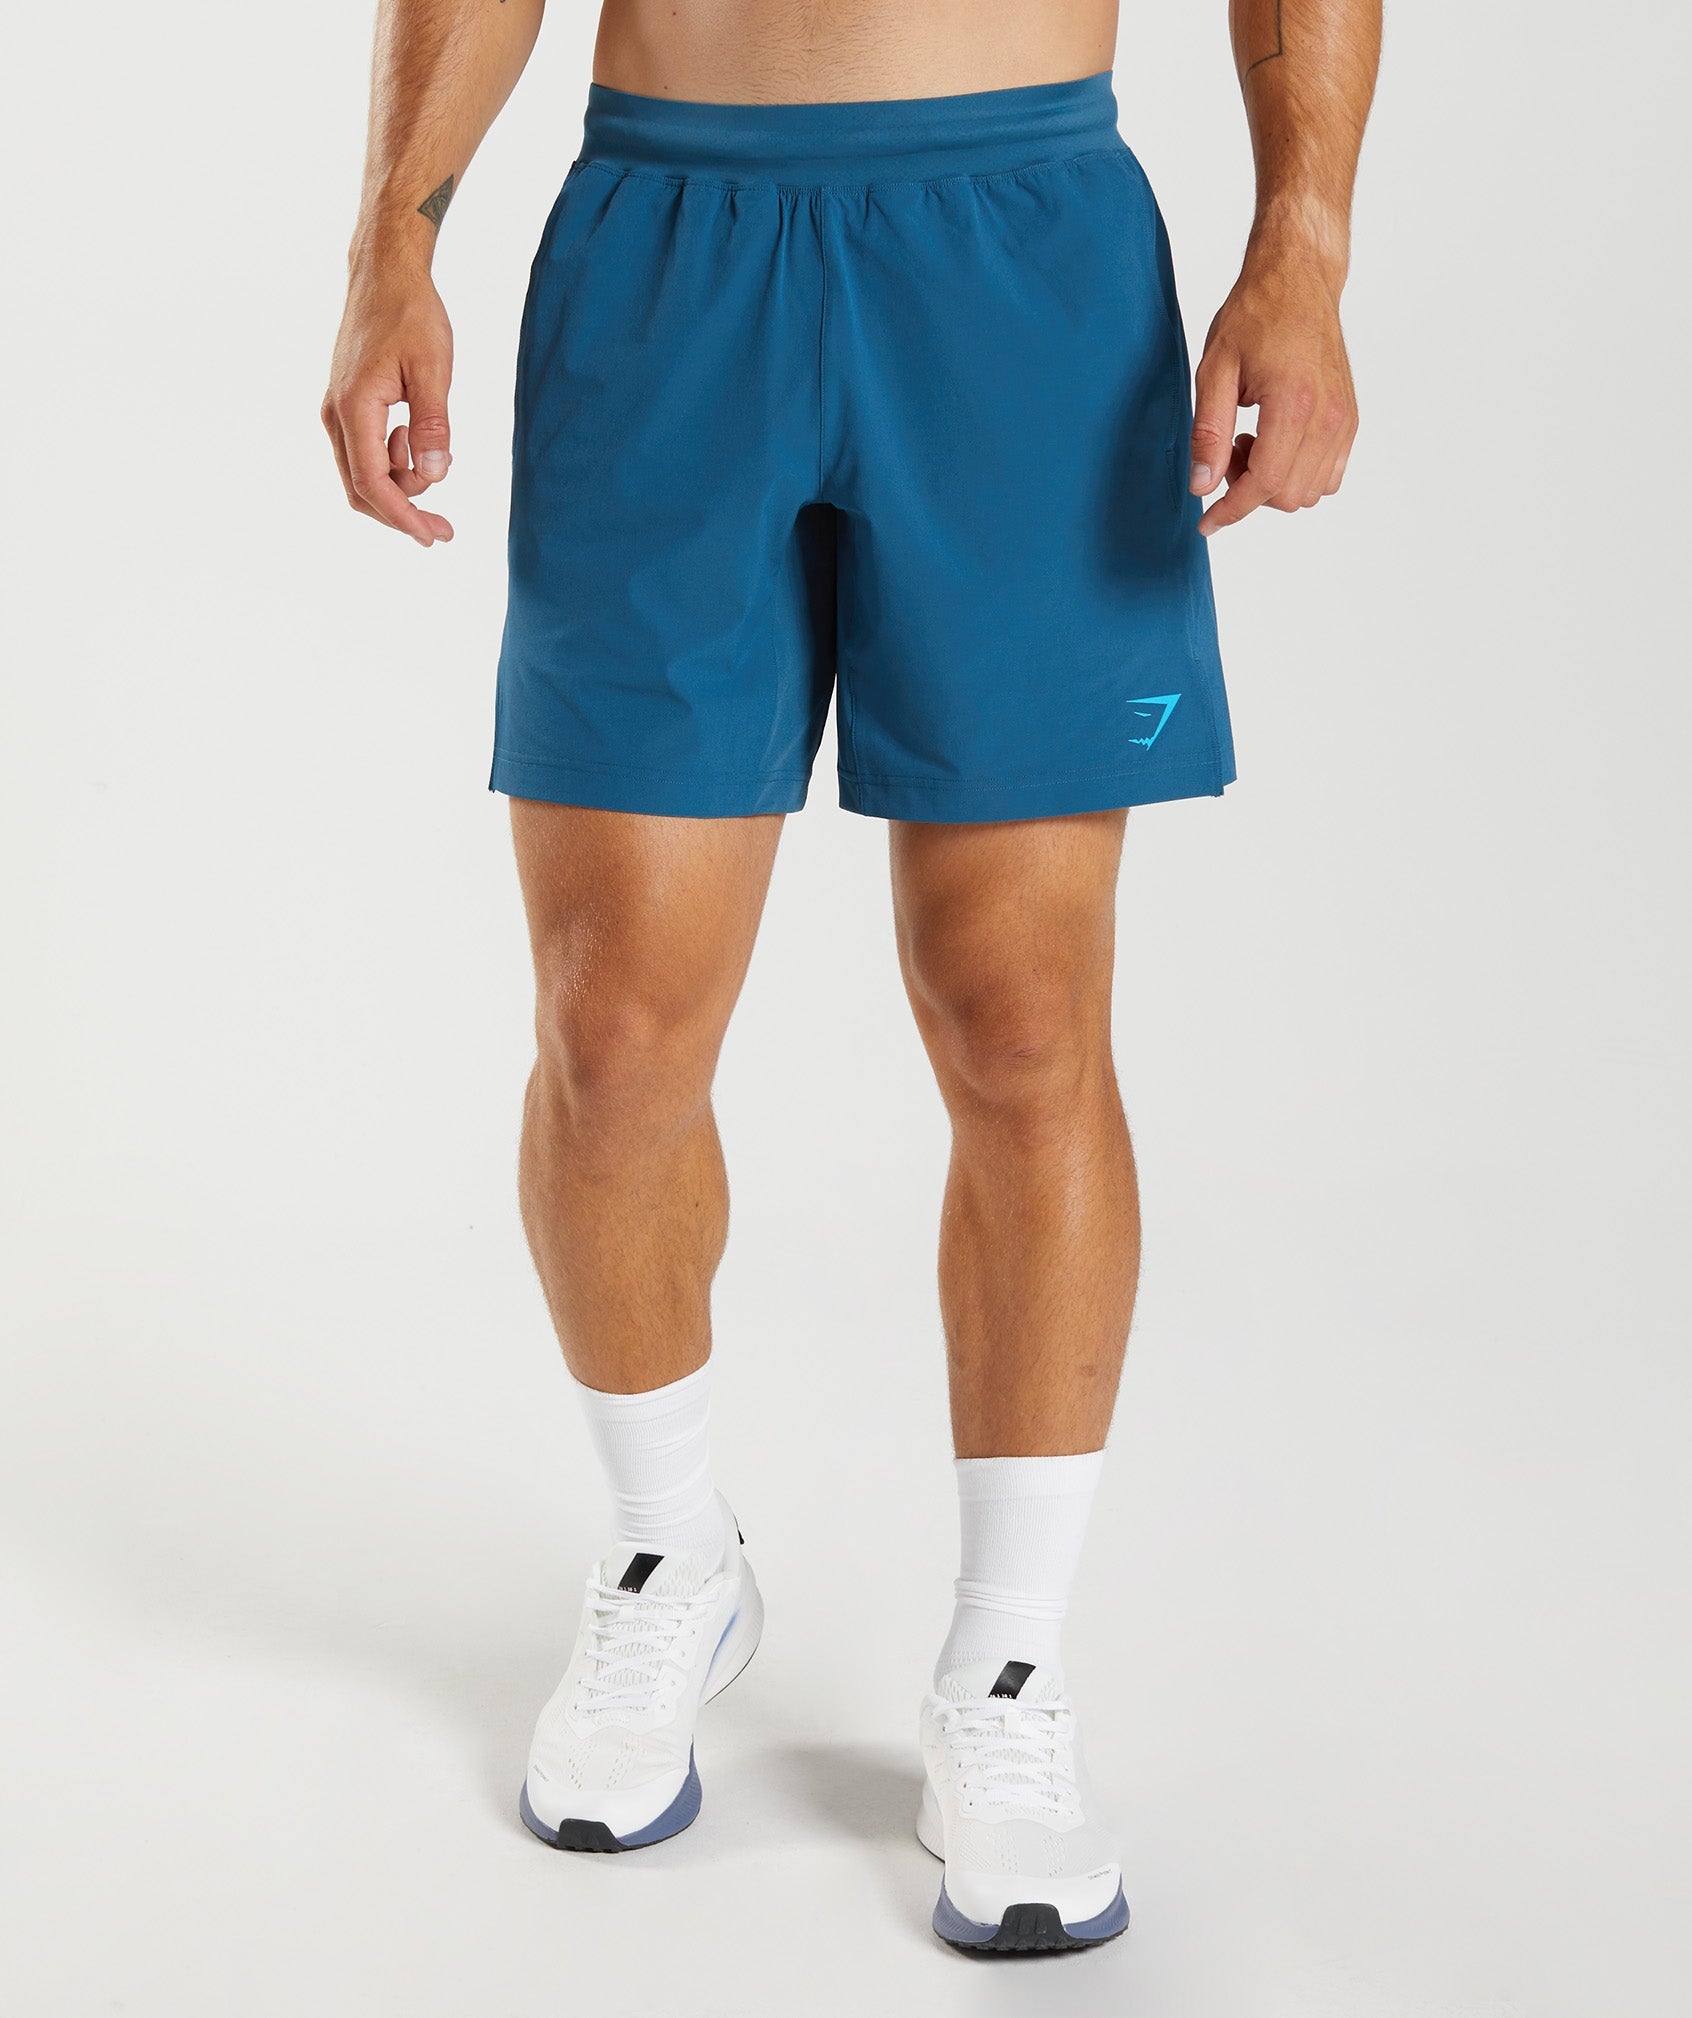 Apex 8" Function Shorts in Atlantic Blue